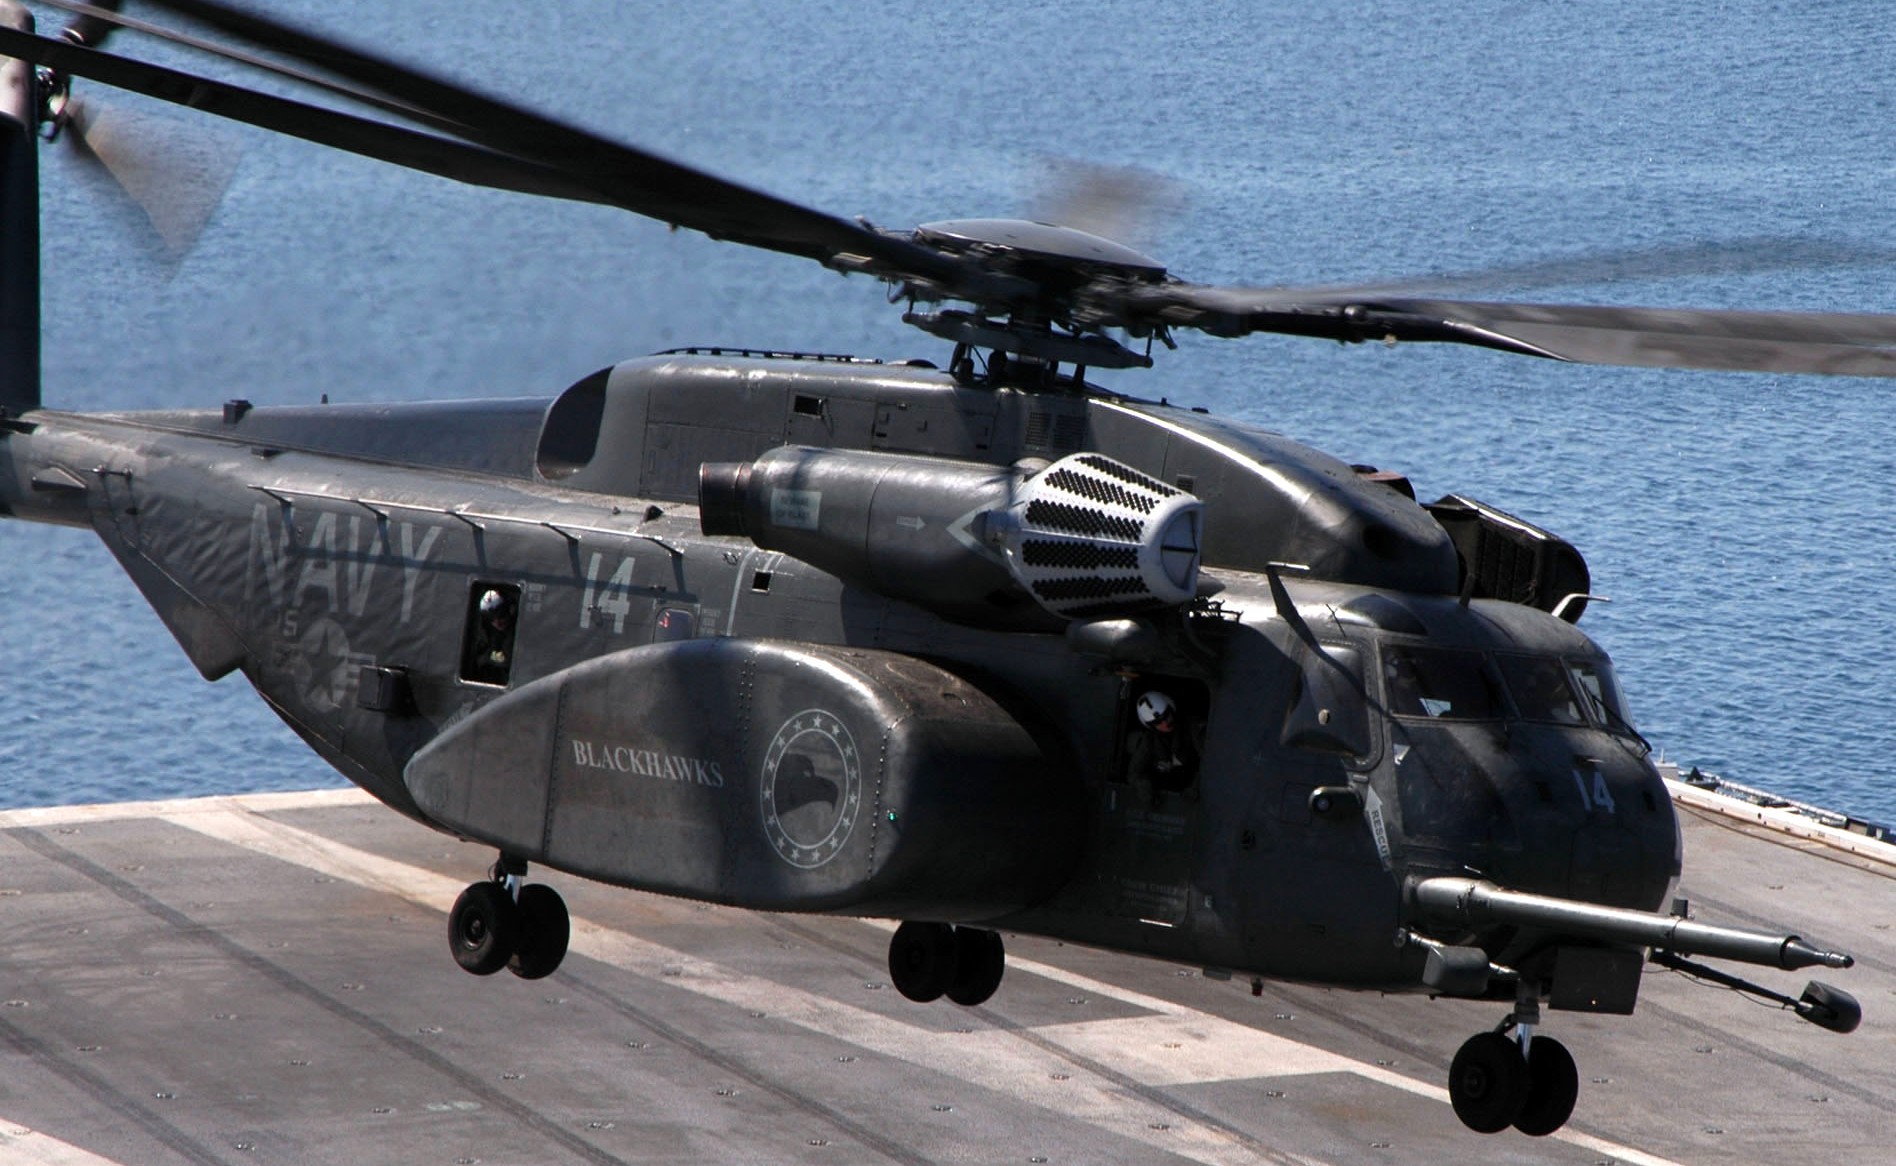 hm-15 blackhawks helicopter mine countermeasures squadron navy mh-53e sea dragon 57 uss carl vinson cvn-70 haiti